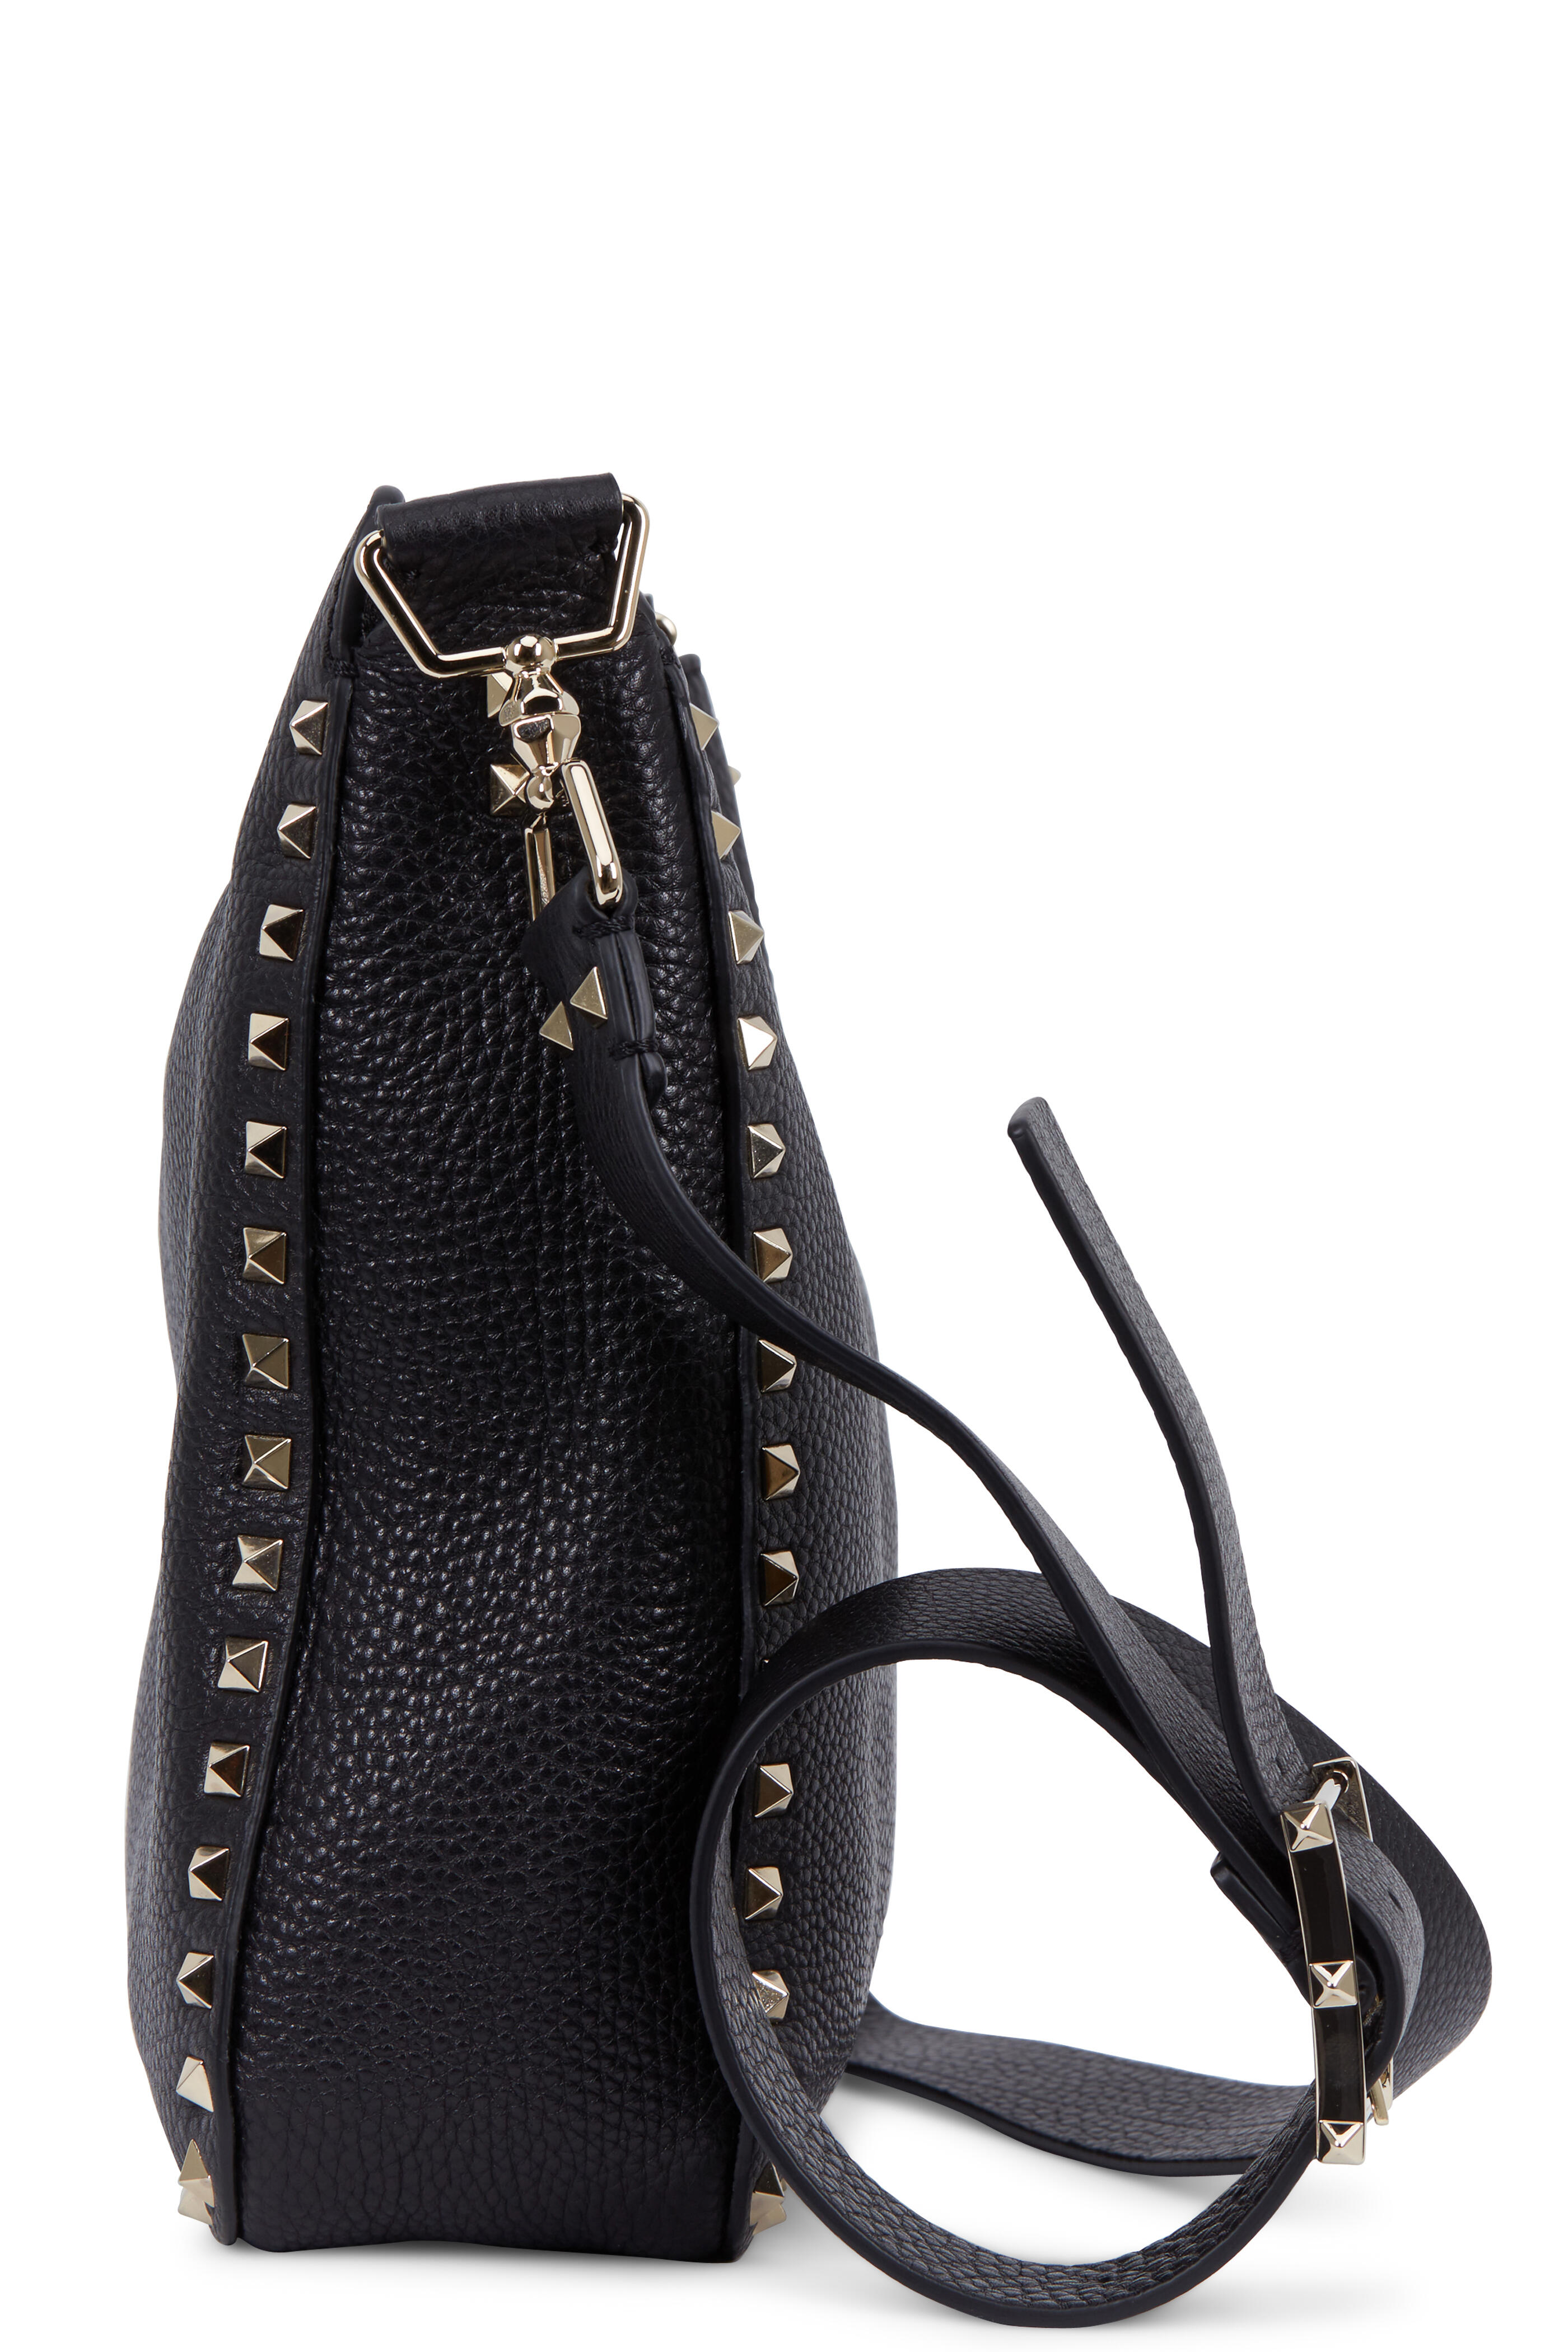 Valentino Garavani Rockstud Mini Vitello Black Leather Tote Shoulder Handbag